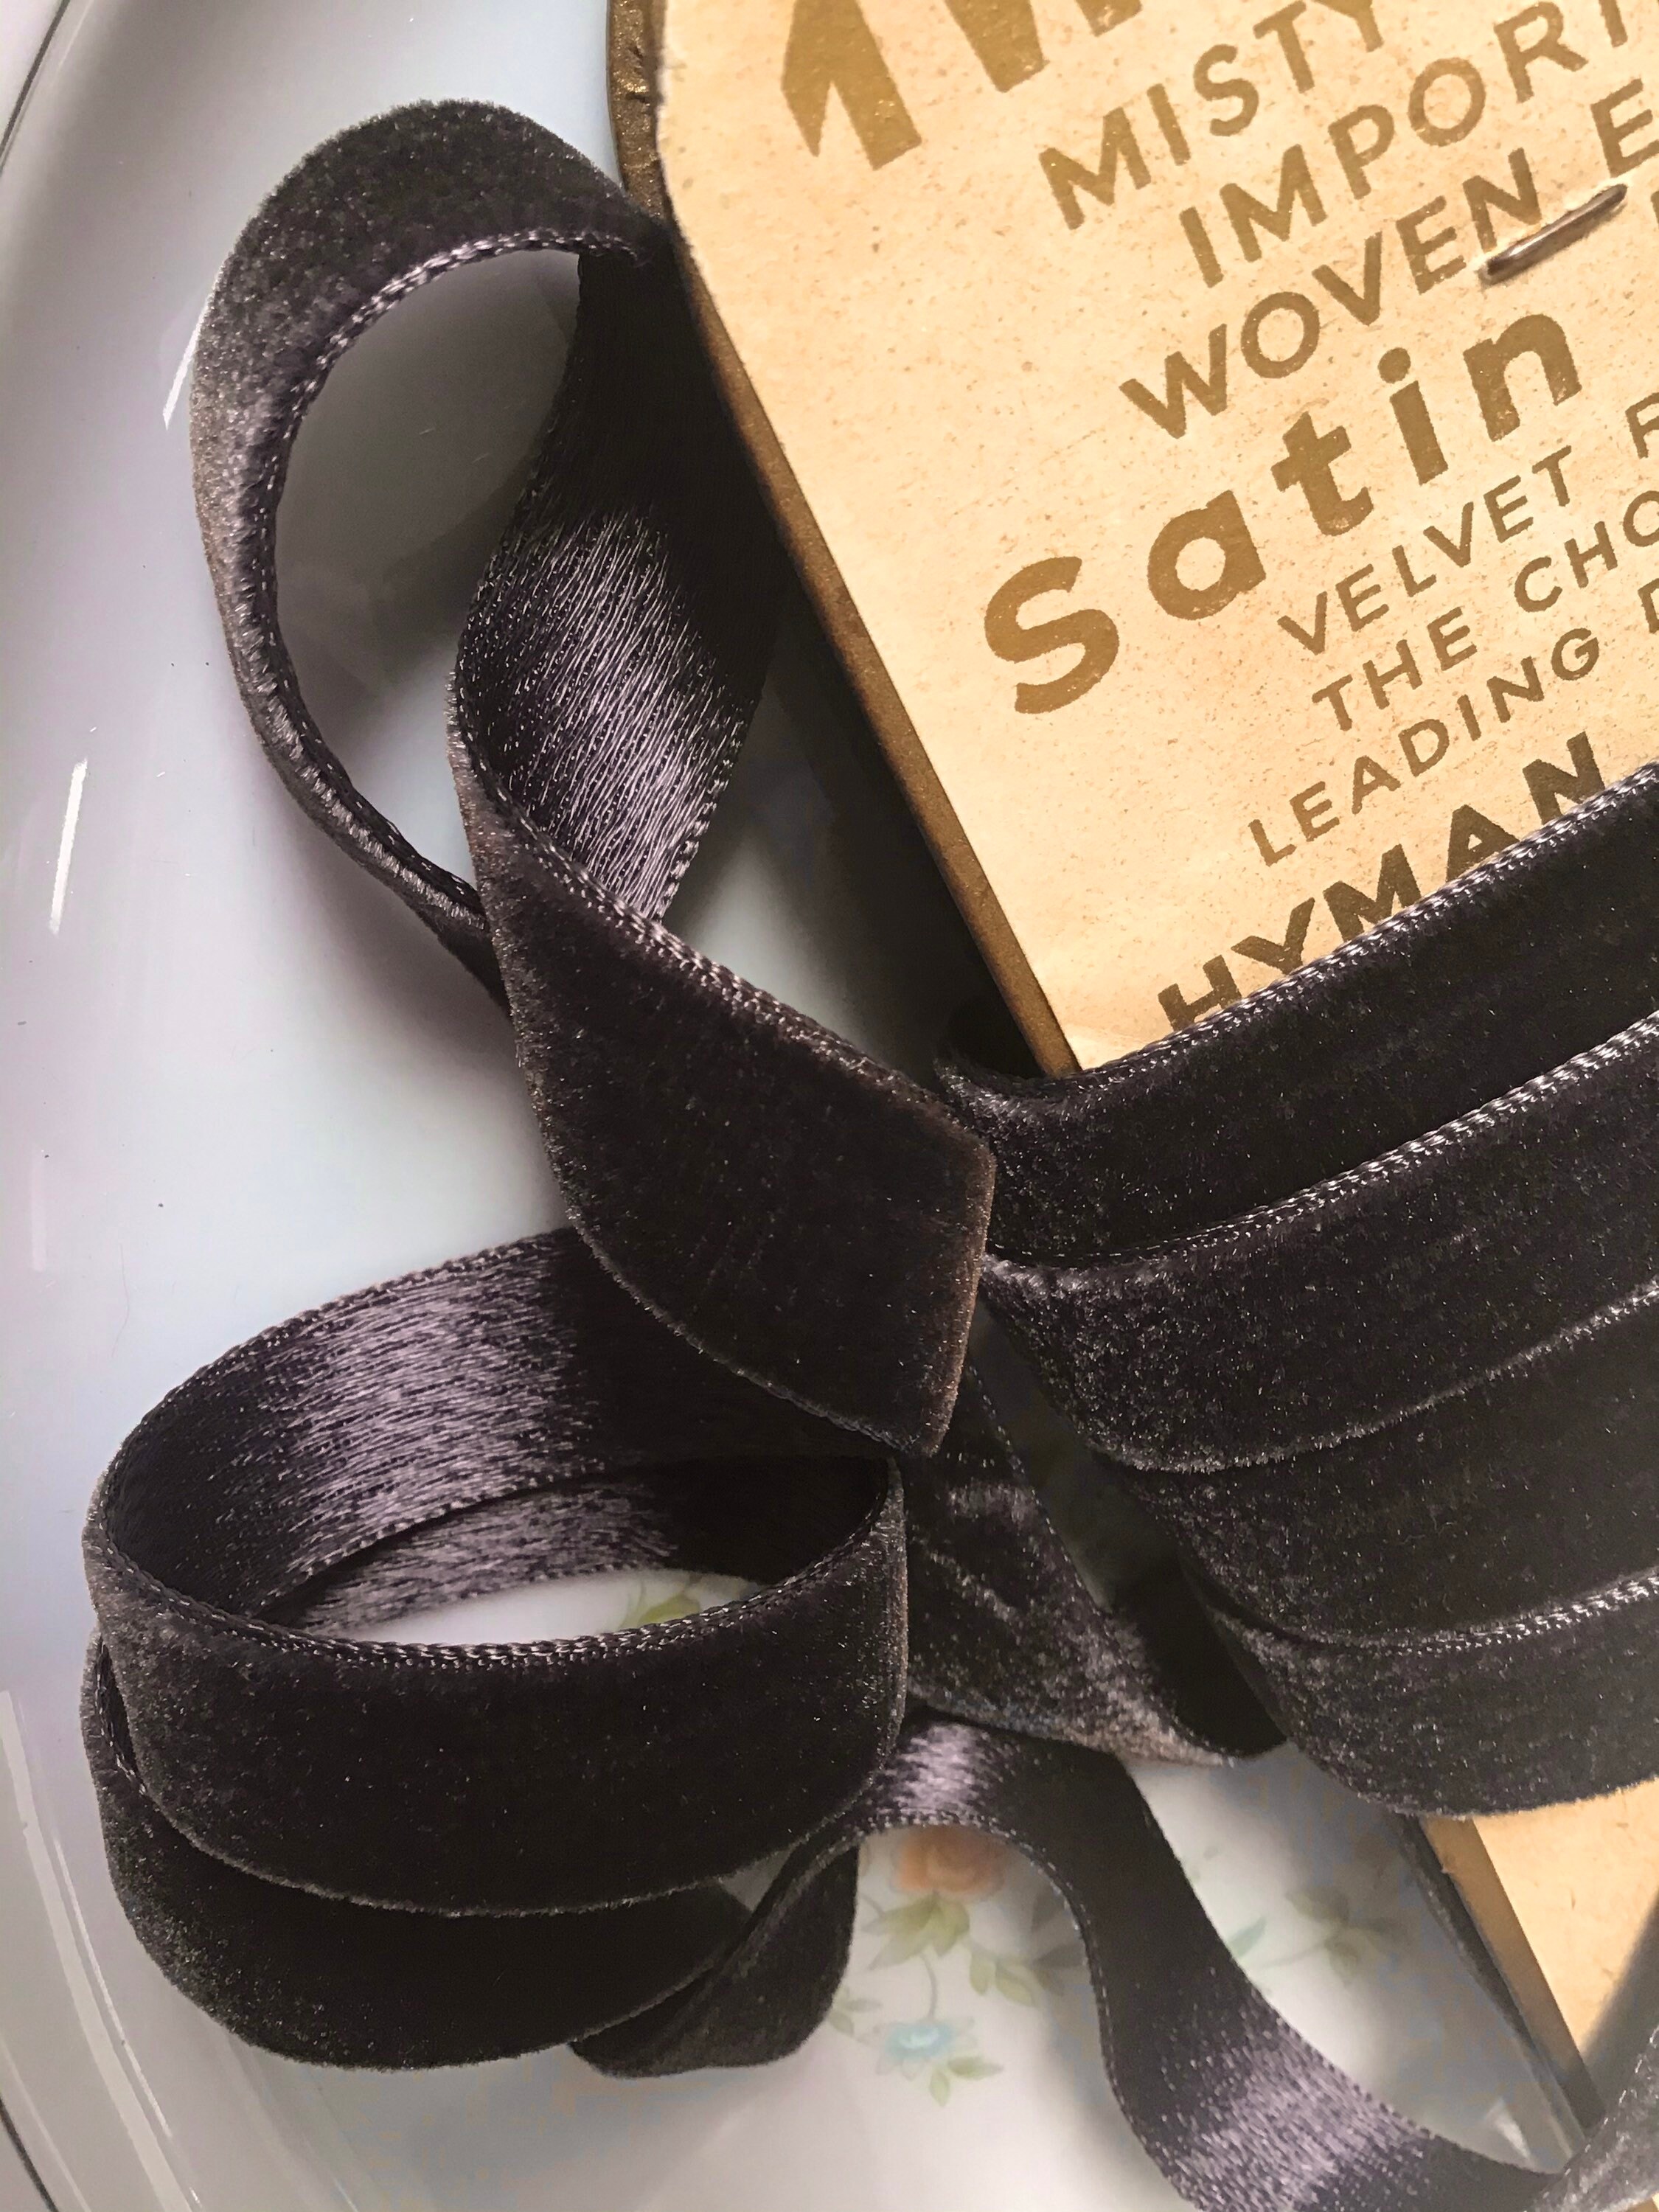 Luxury Velvet Ribbon | Dark Chocolate